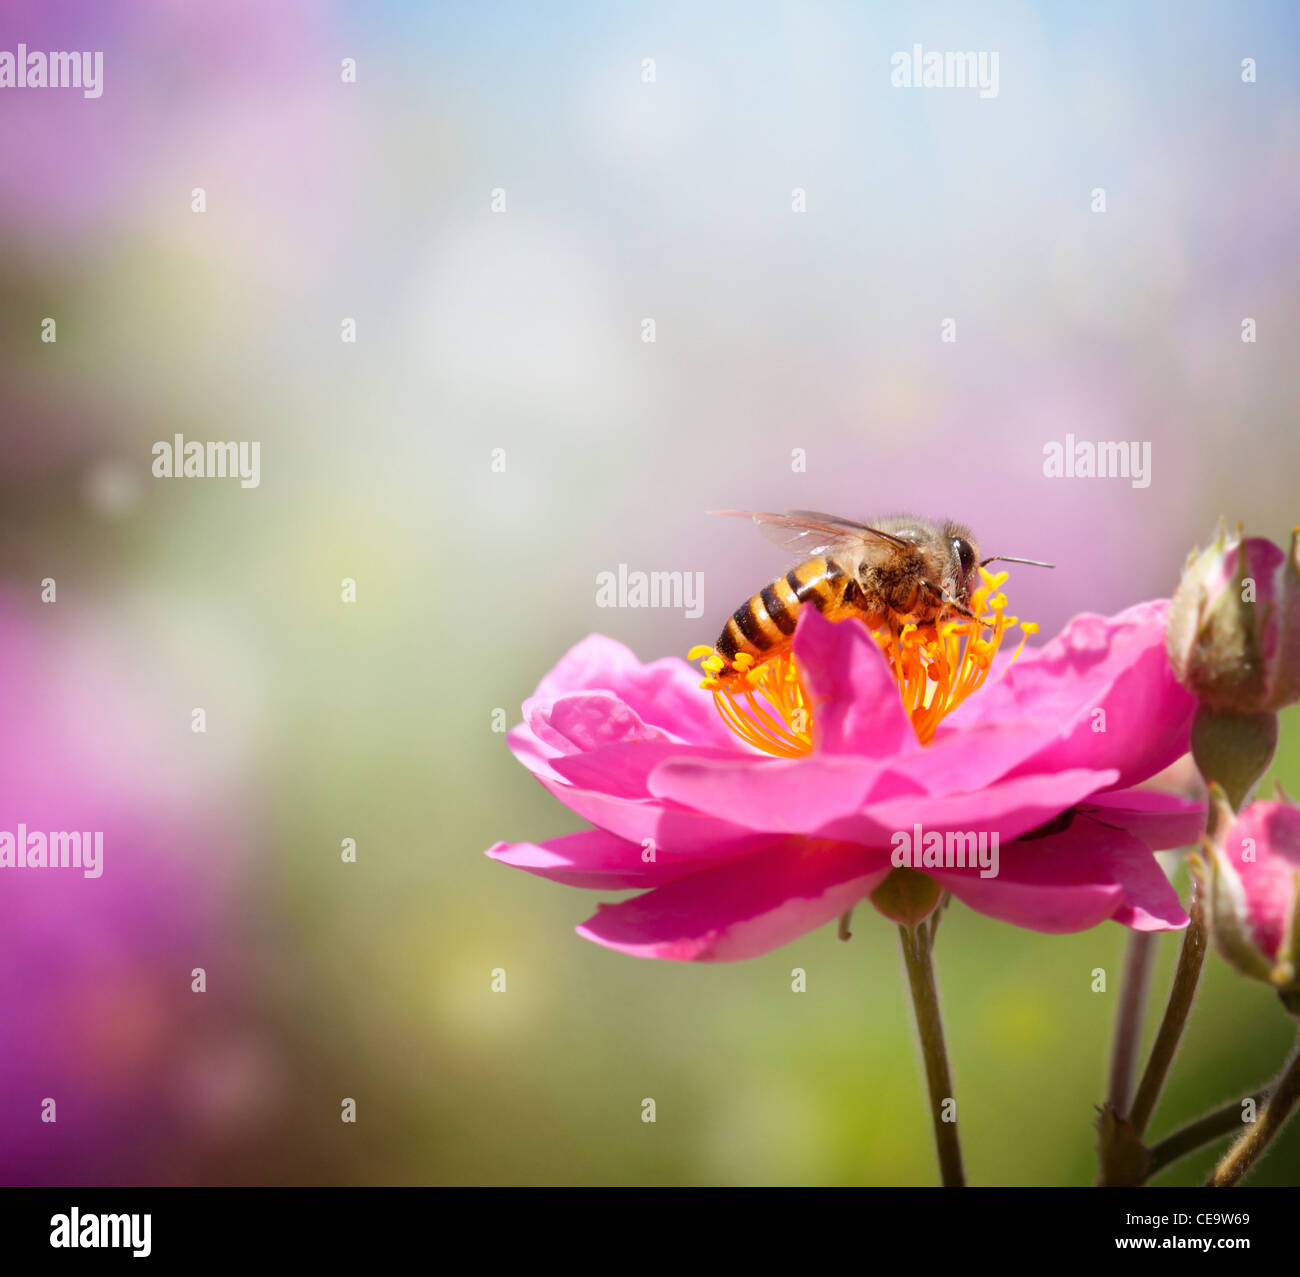 Cierre recogiendo miel de abeja en flor rosa Foto de stock